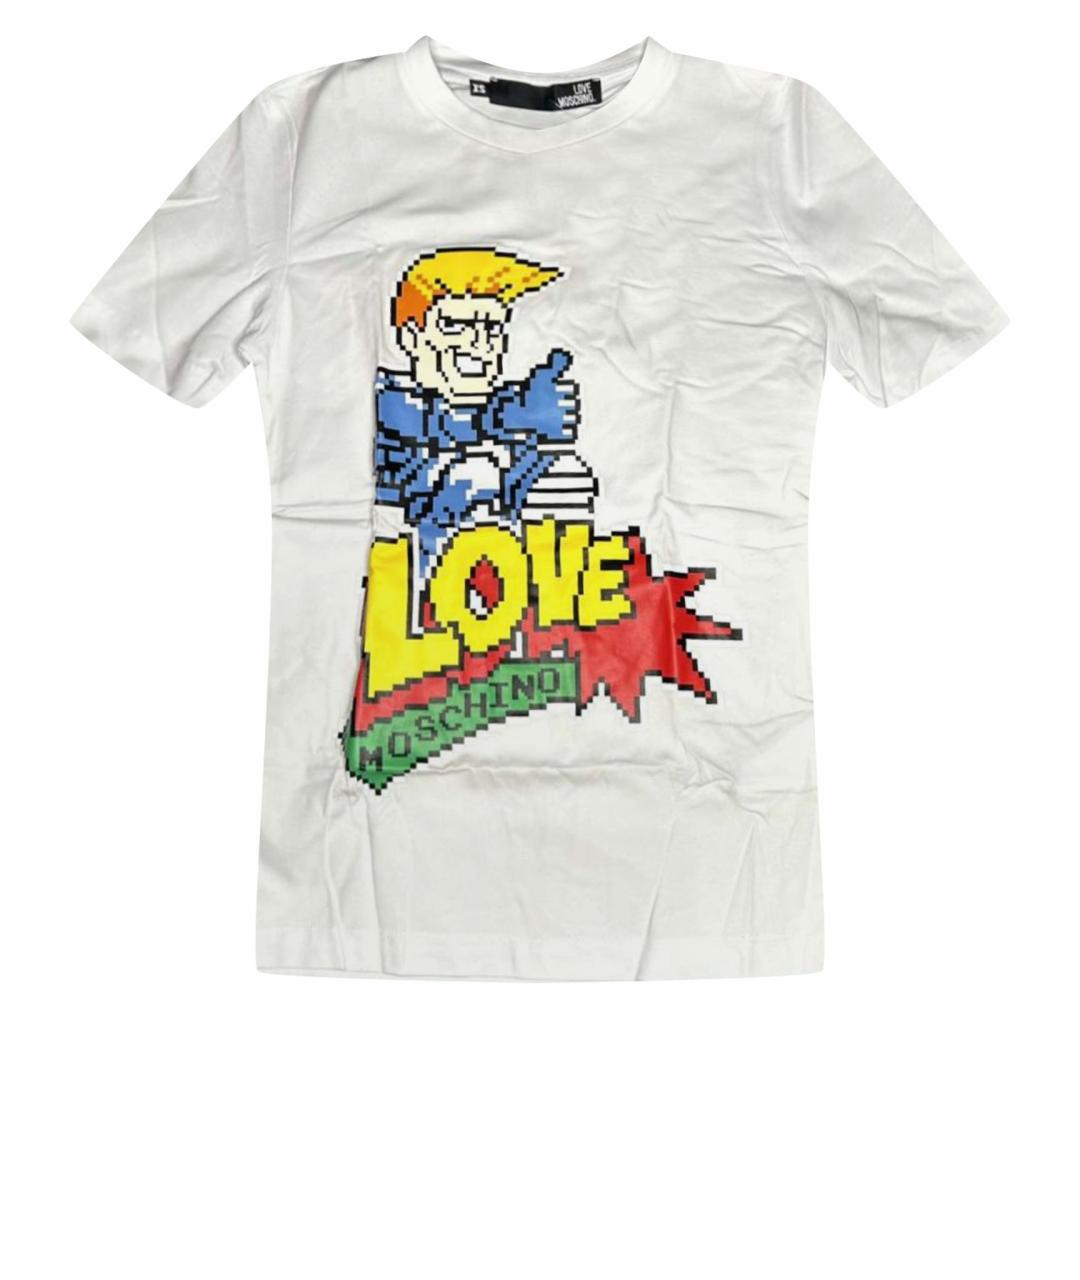 LOVE MOSCHINO Белая хлопковая футболка, фото 1